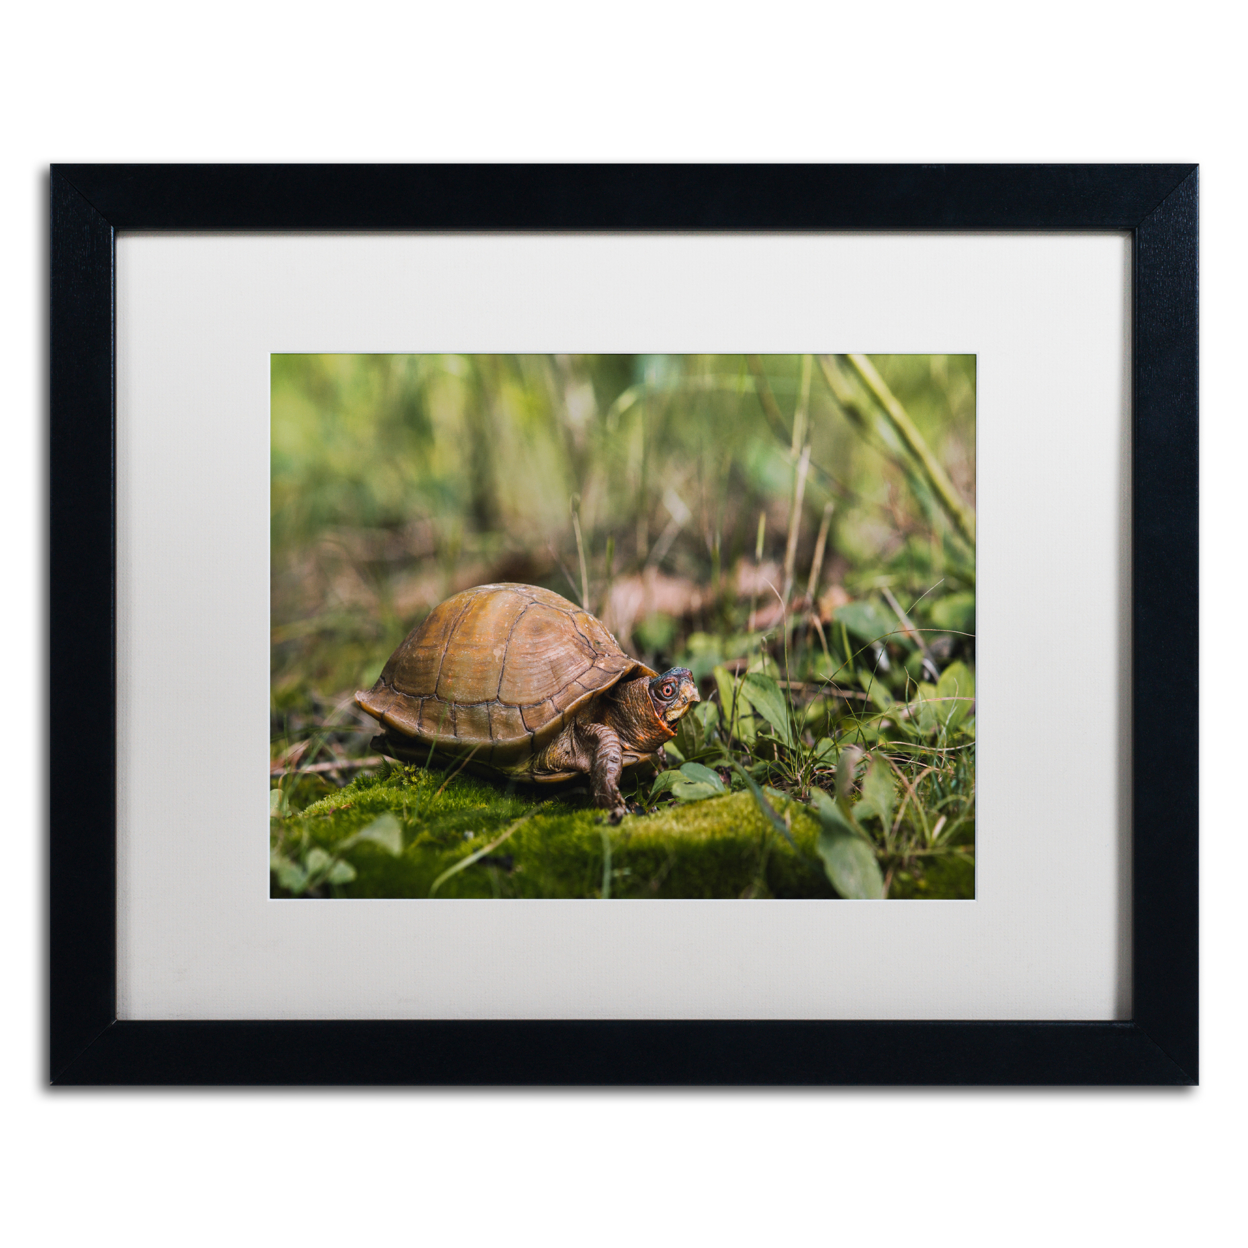 Jason Shaffer 'Box Turtle' Black Wooden Framed Art 18 X 22 Inches